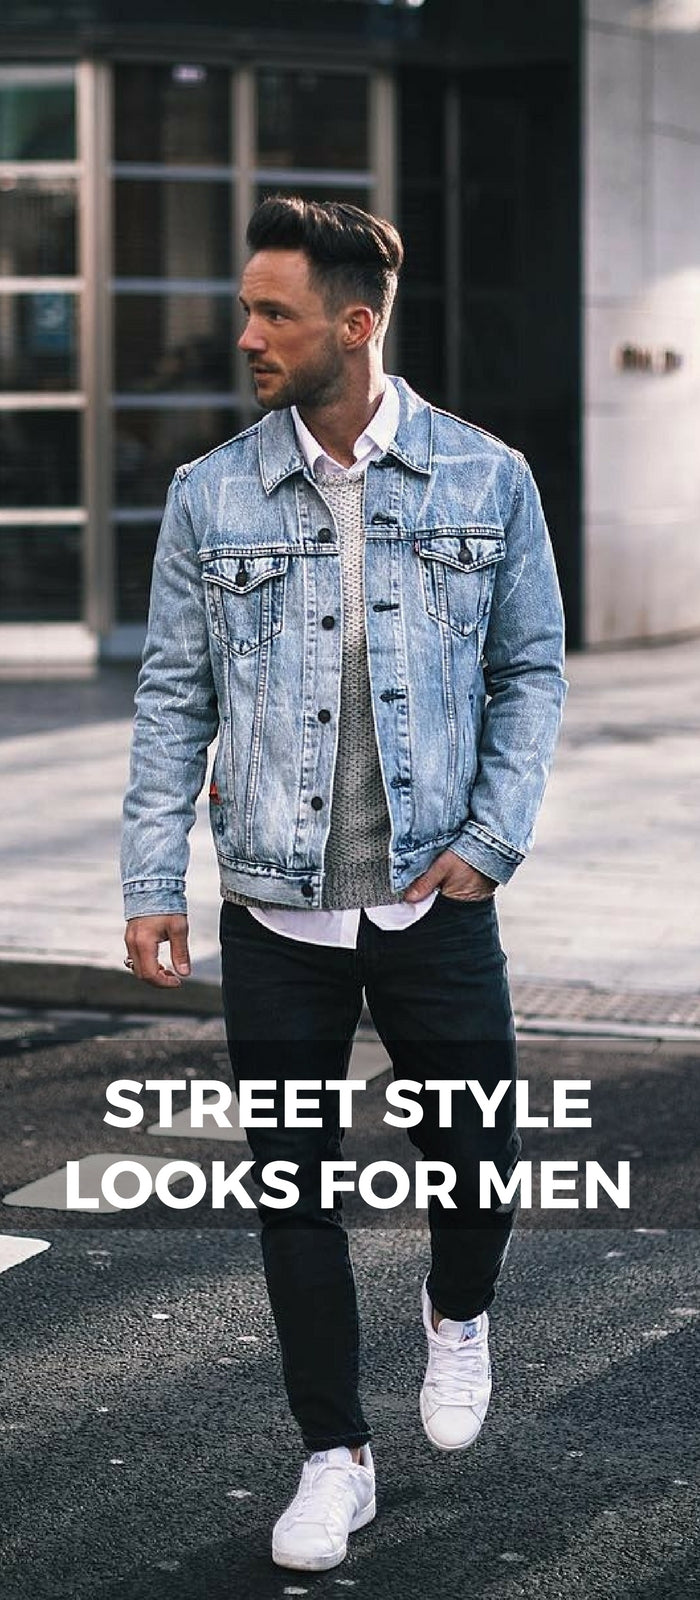 Street style looks for men magic fox